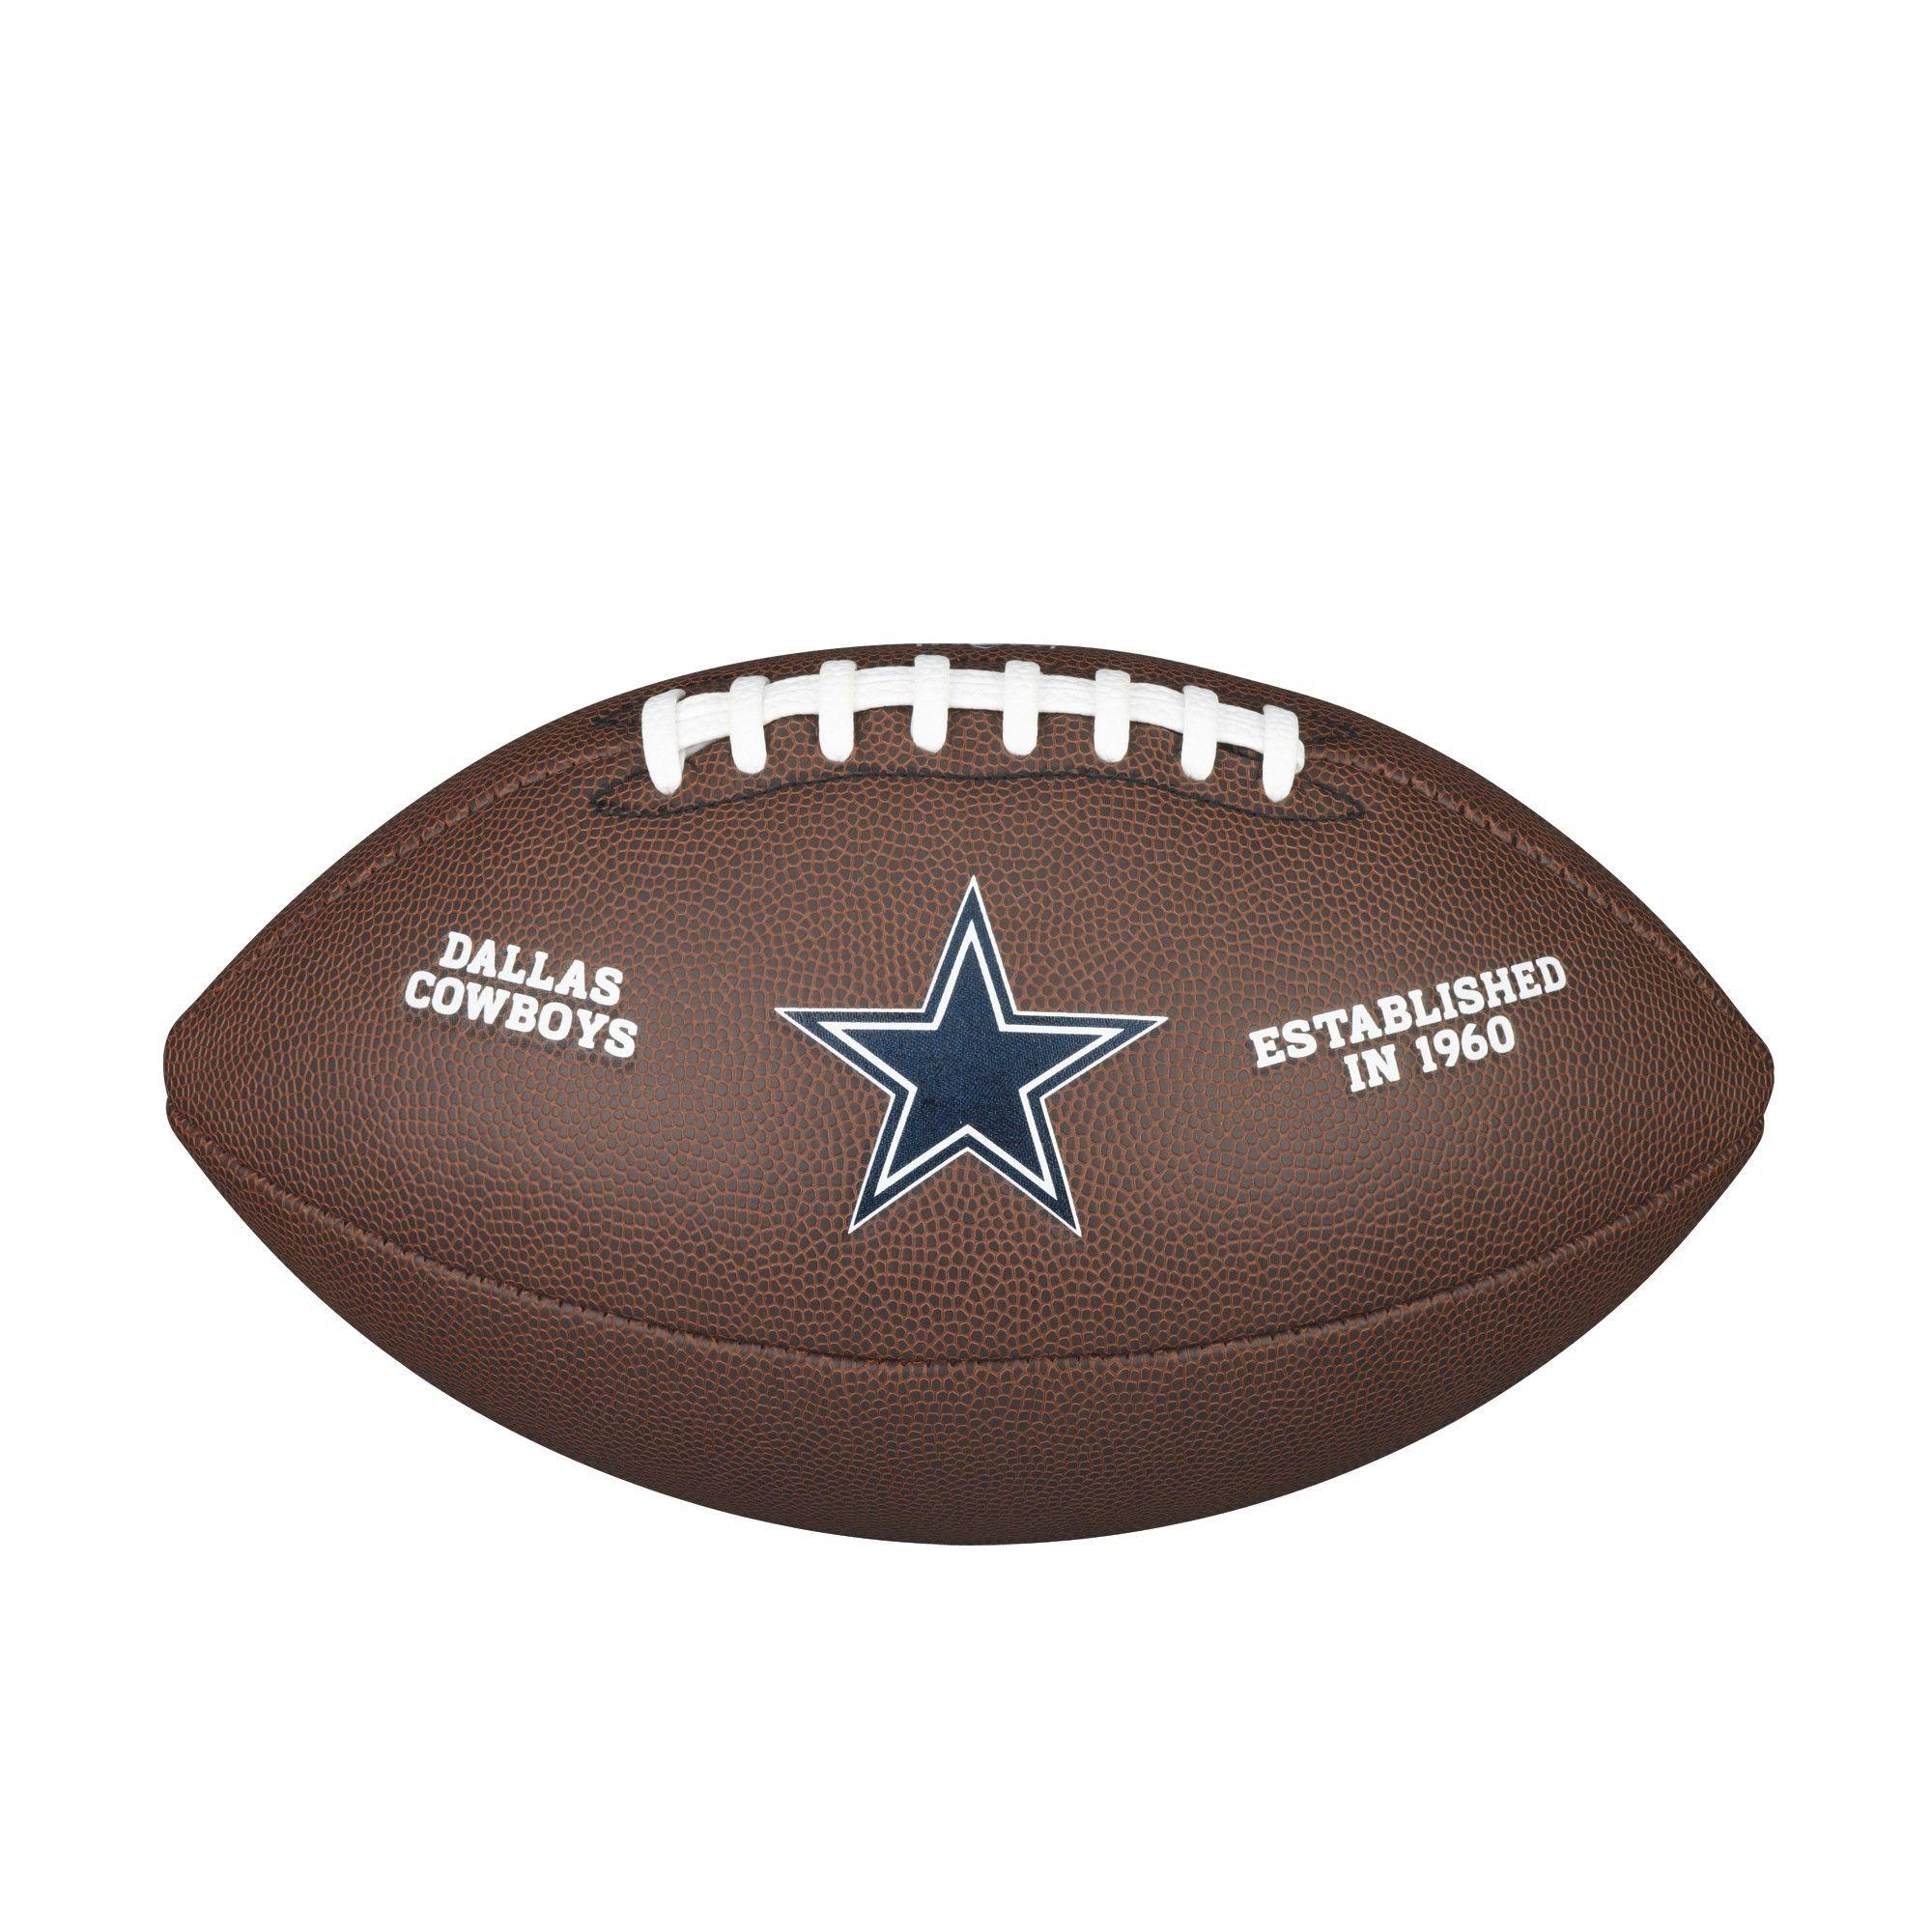 Cowboys Football Logo - NFL TEAM LOGO COMPOSITE FOOTBALL, DALLAS COWBOYS. Wilson